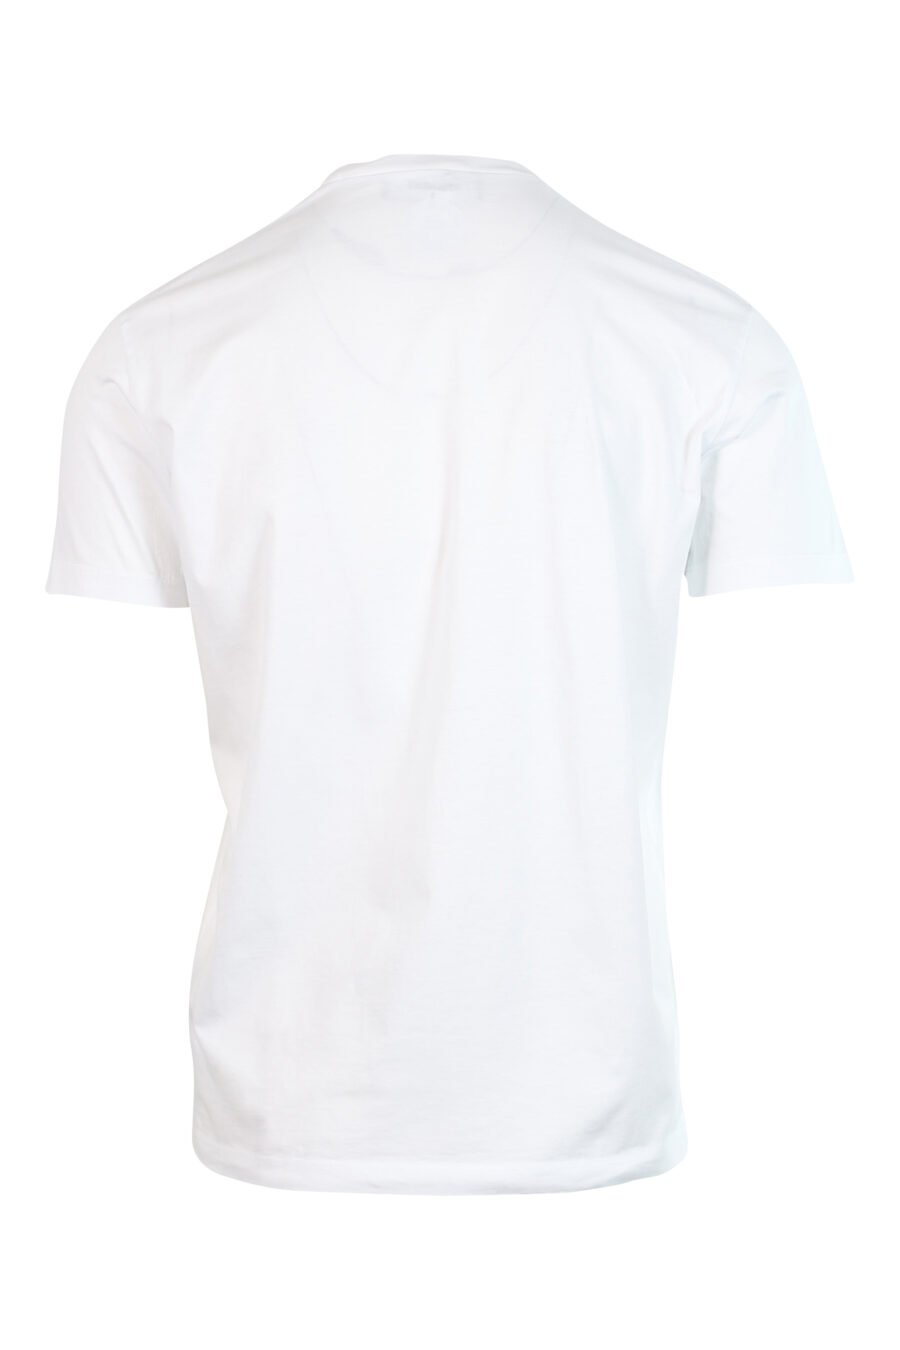 Camiseta blanca con maxilogo "icon heart pixel" - 8052134980842 2